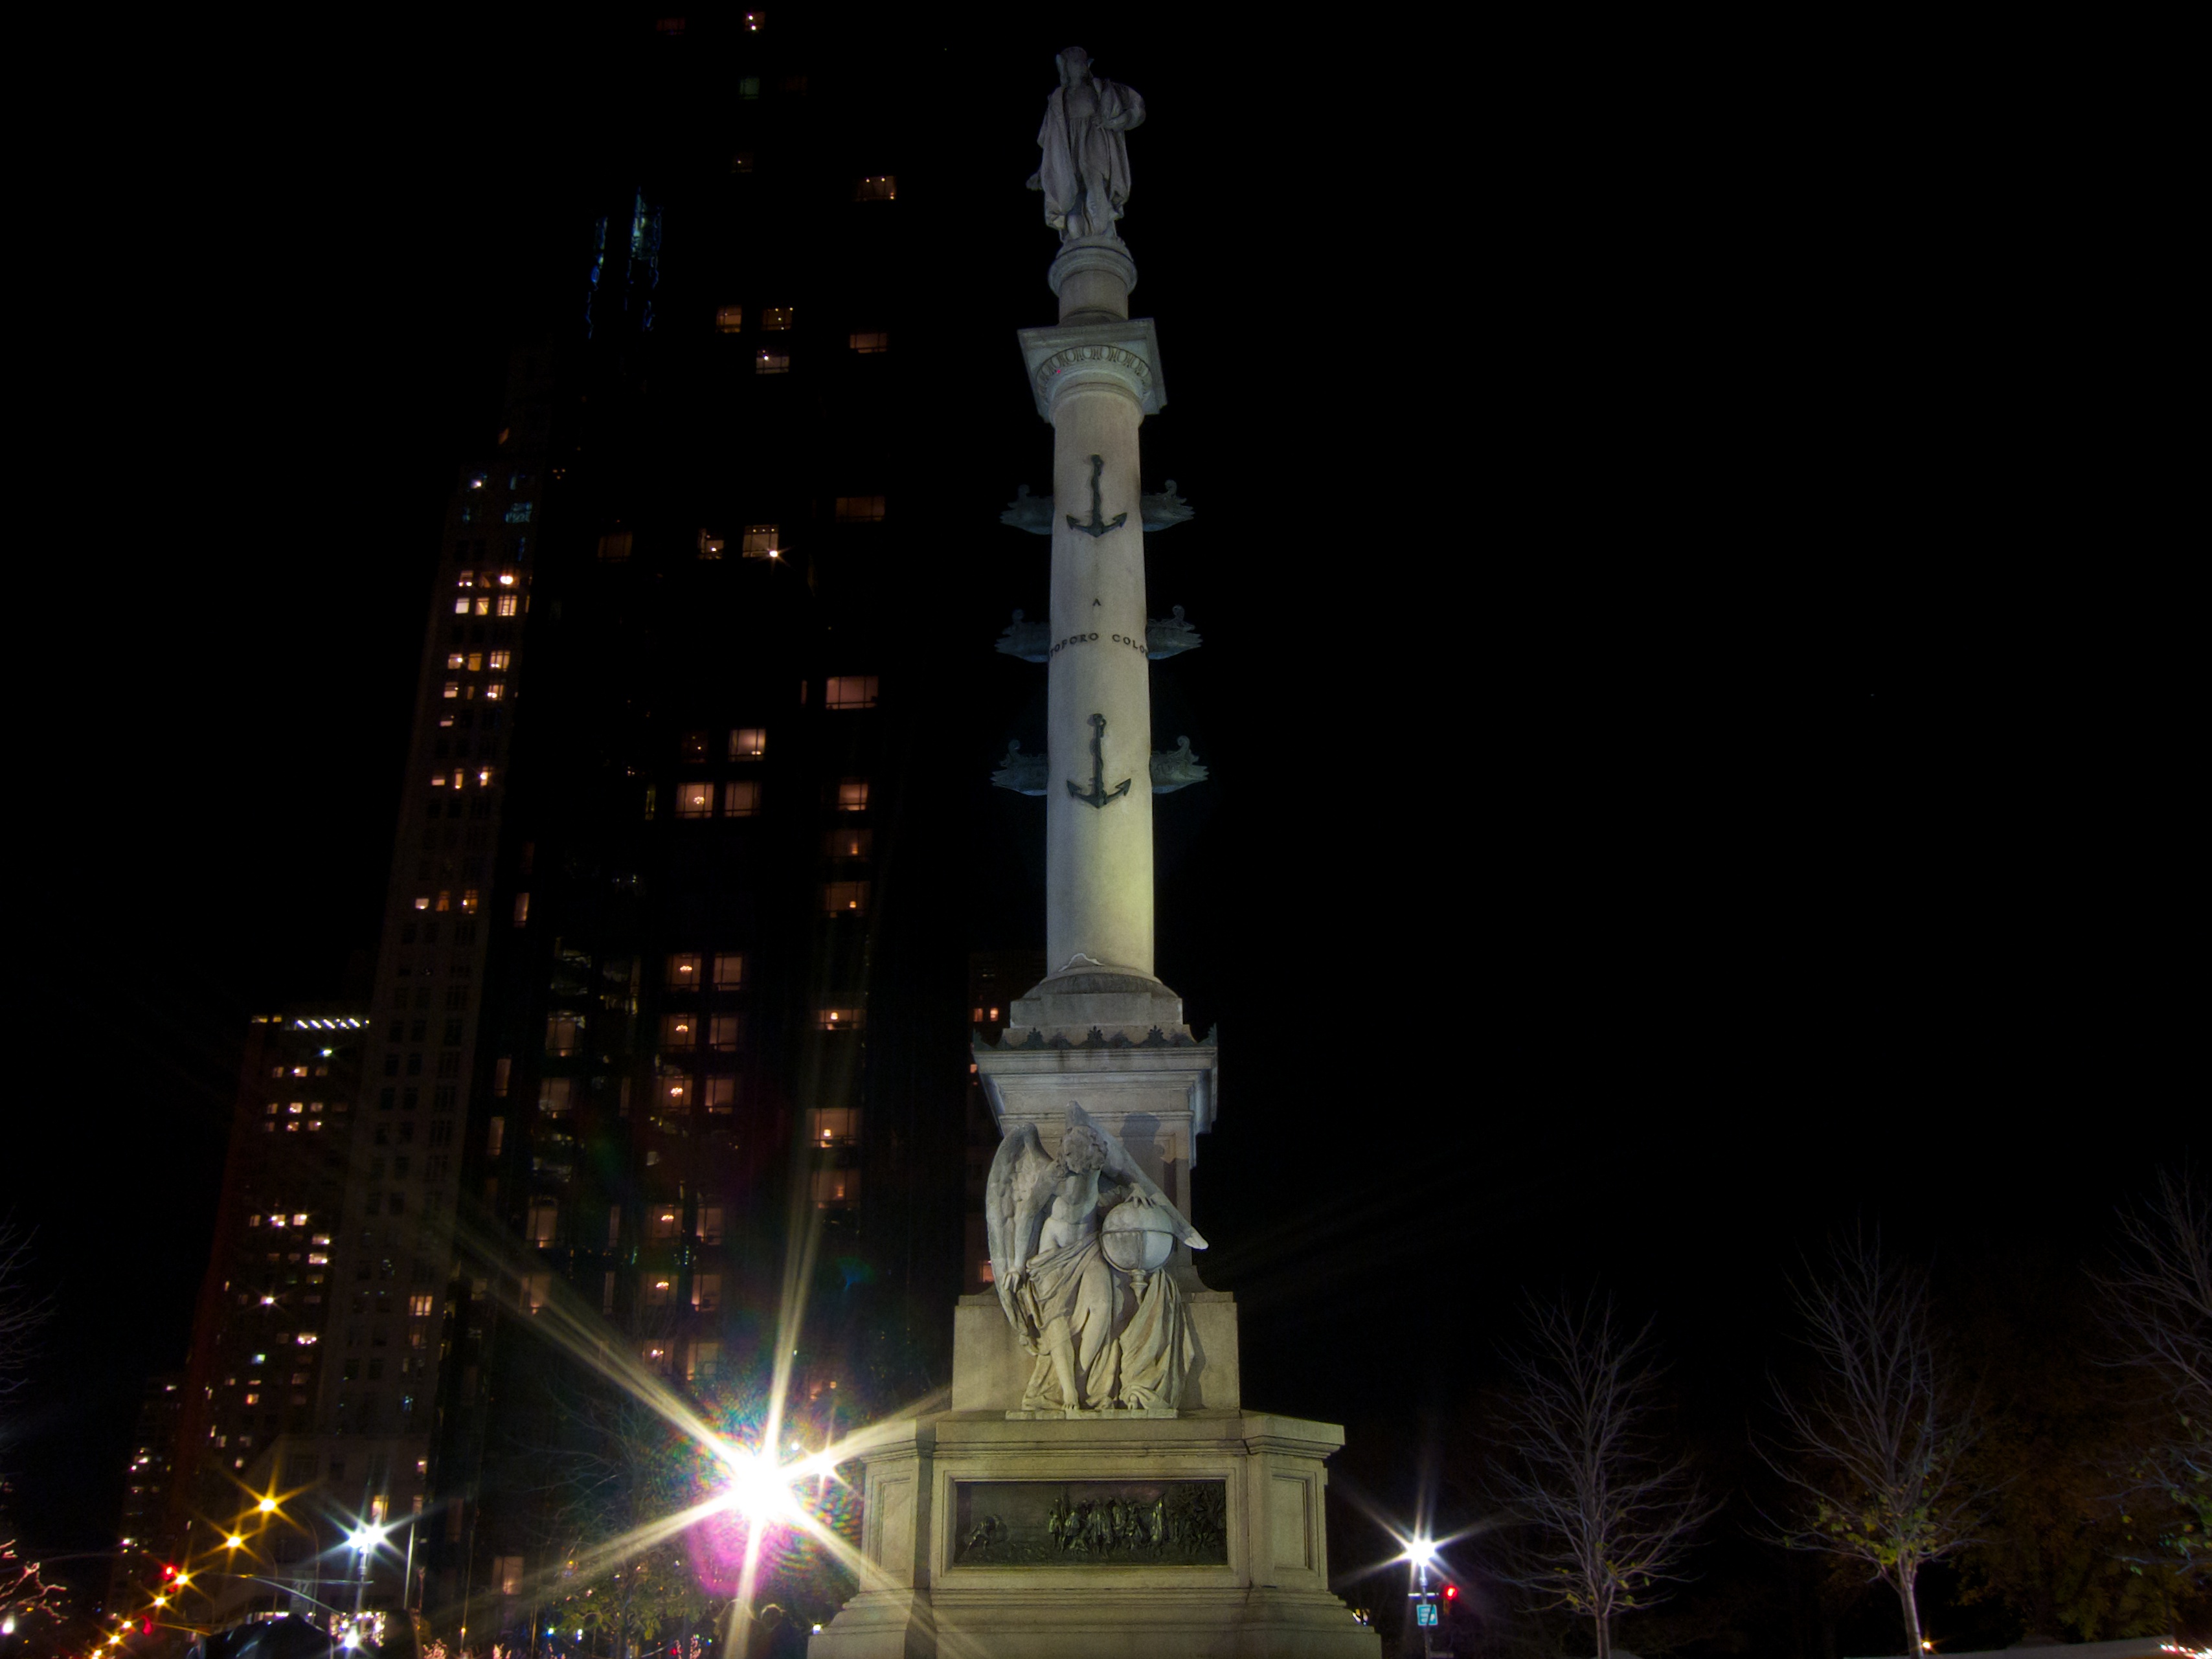 Day 341 - Columbus Circle By Night